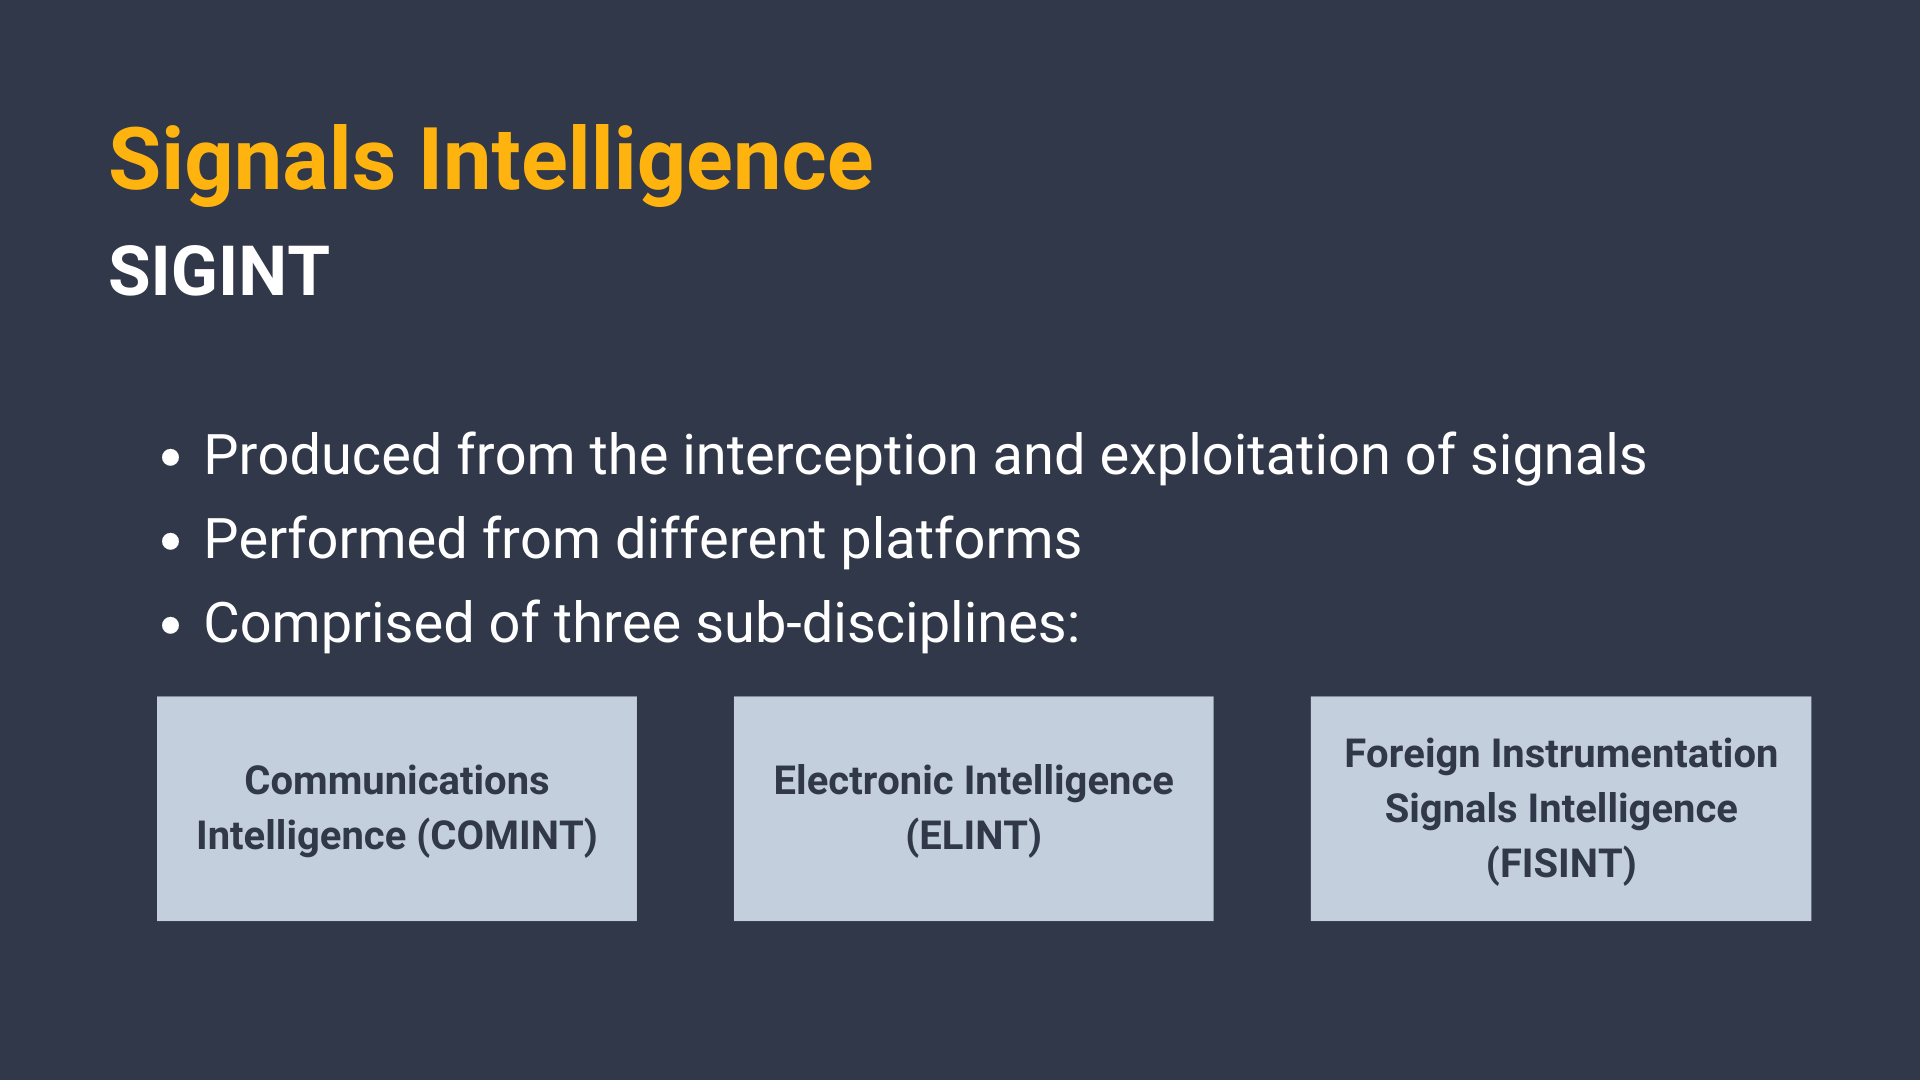 Signals Intelligence (SIGINT)